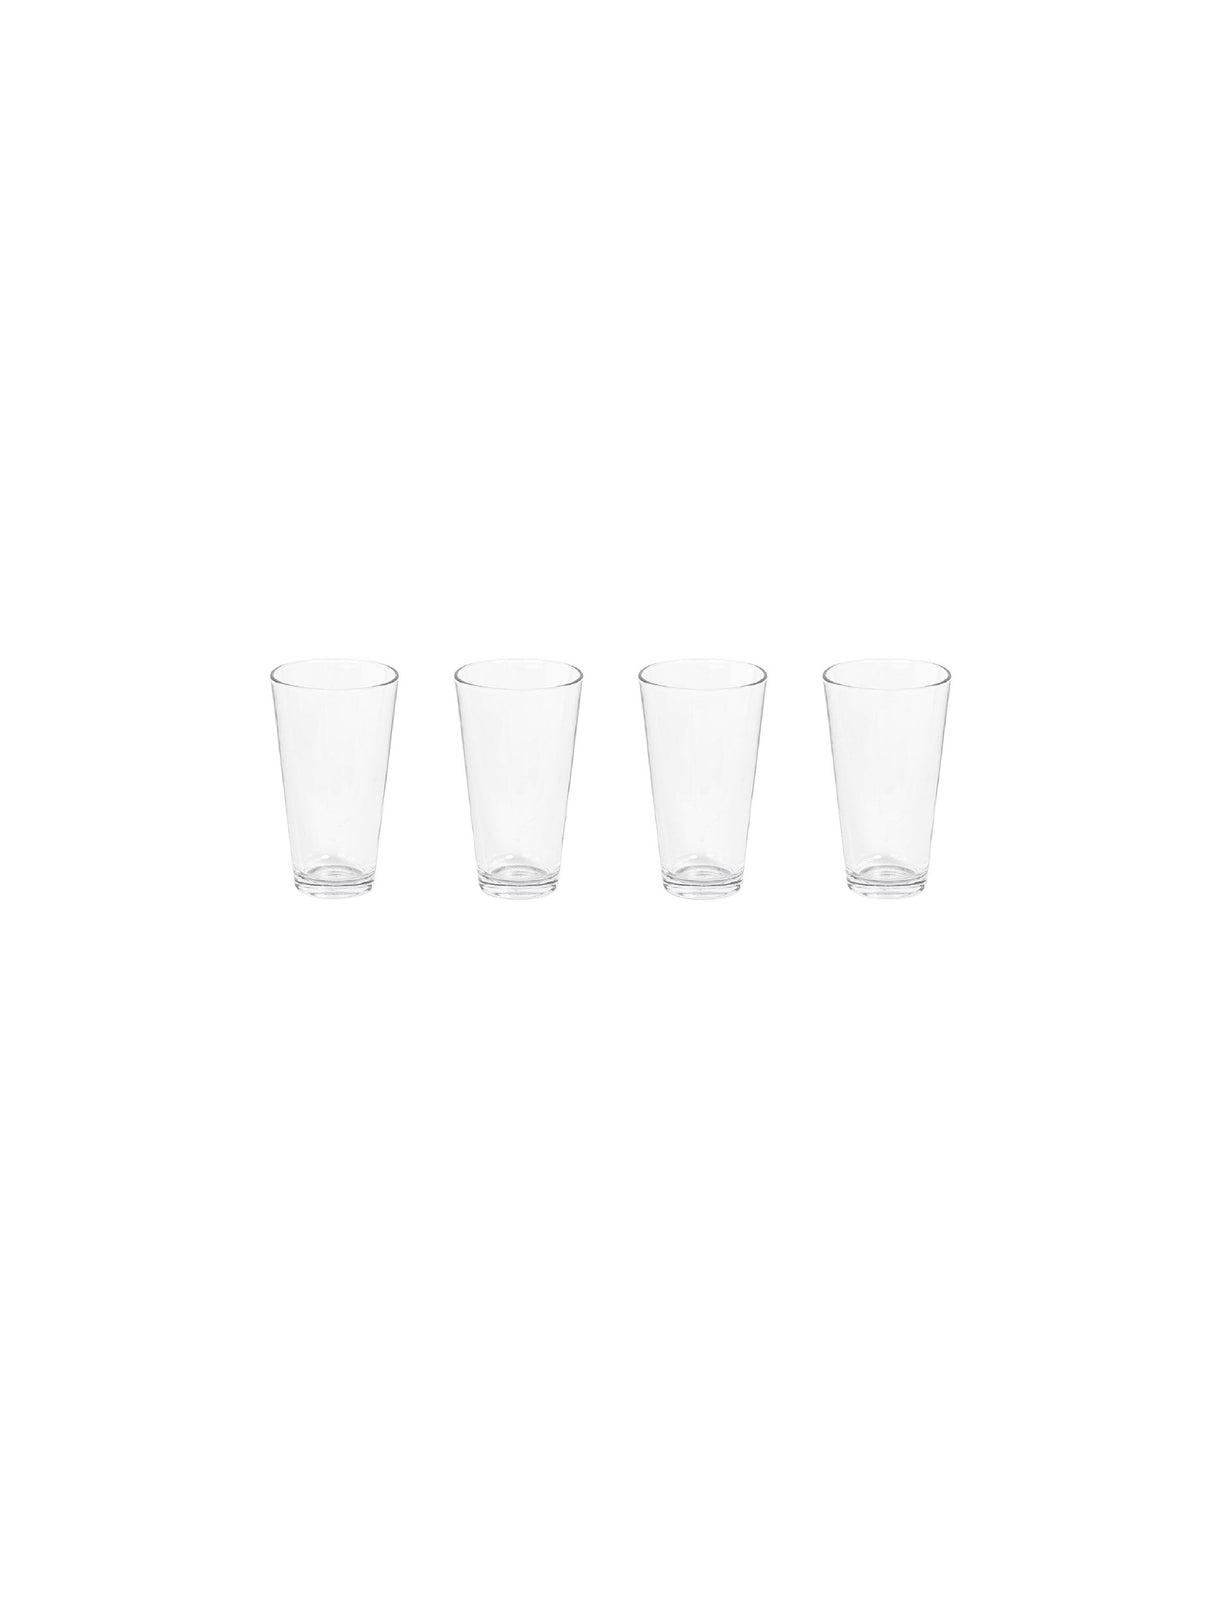 Image for Glasses, Set Of 4